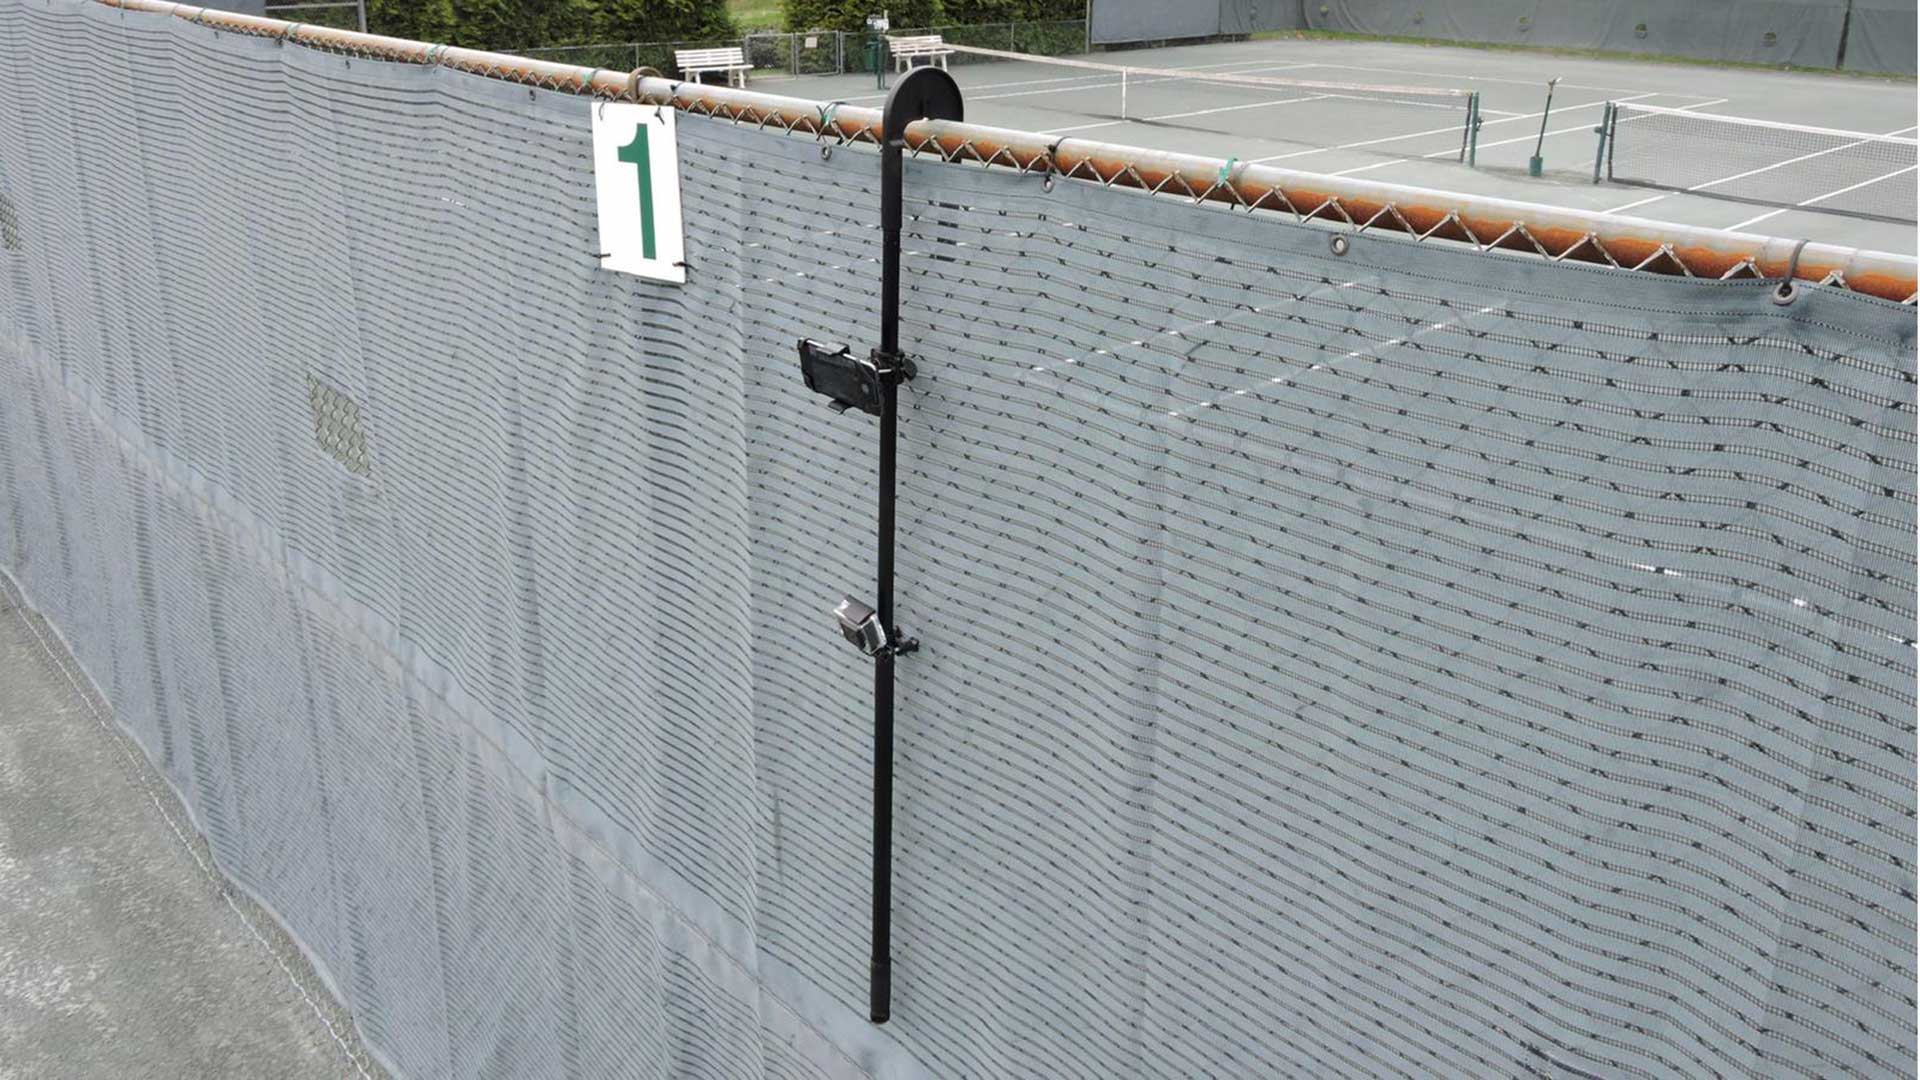 Camera mount setup on teh fence